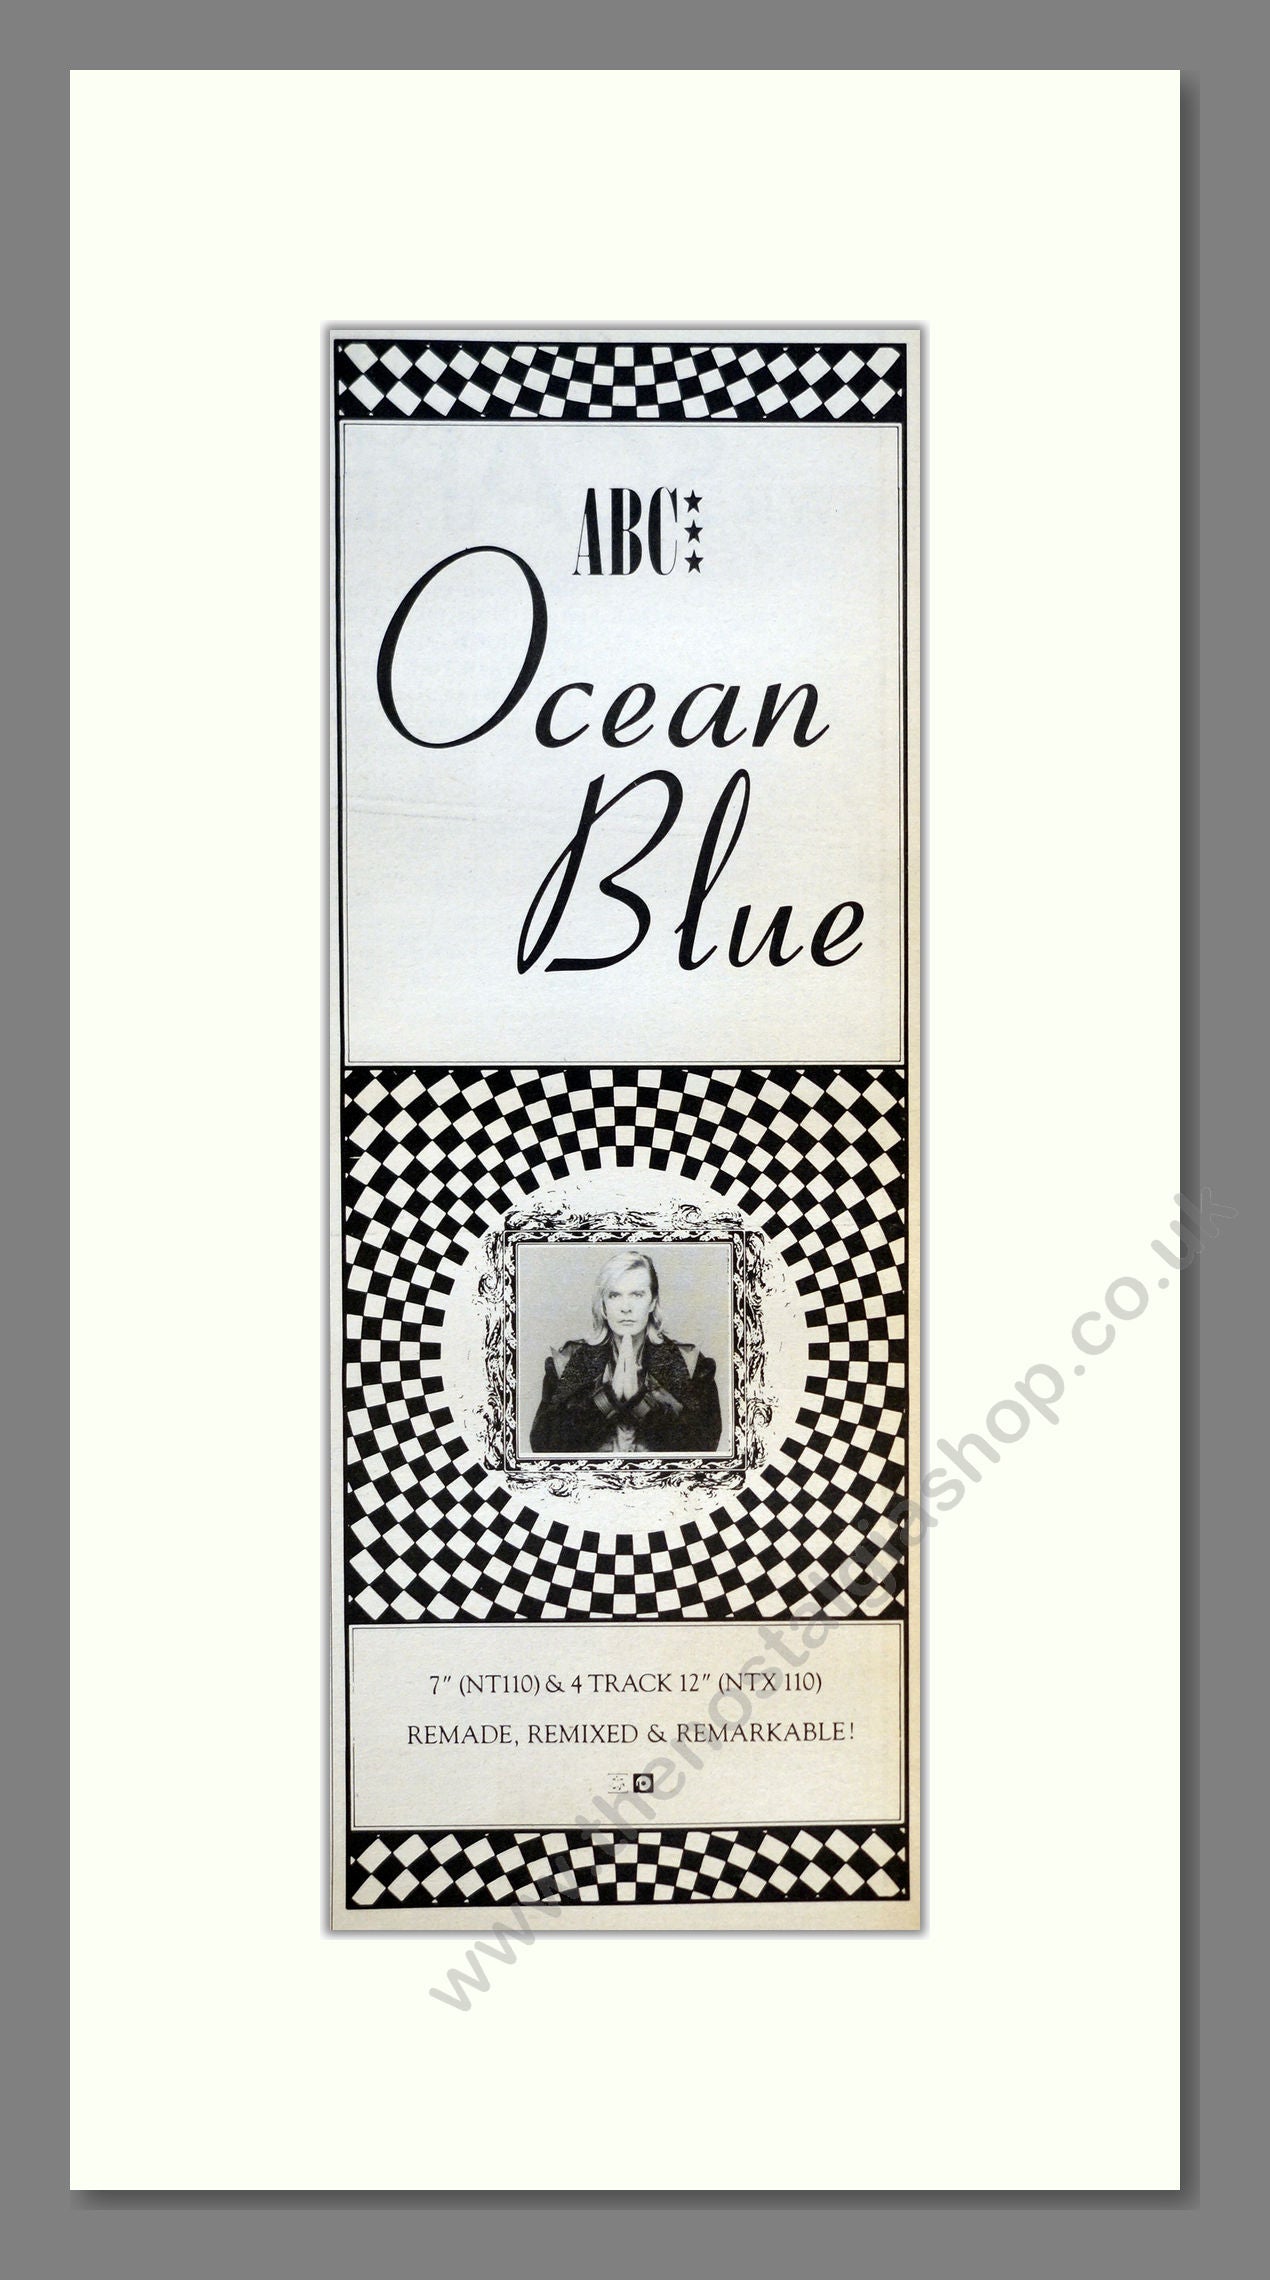 ABC - Ocean Blue. Vintage Advert 1986 (ref AD200826)